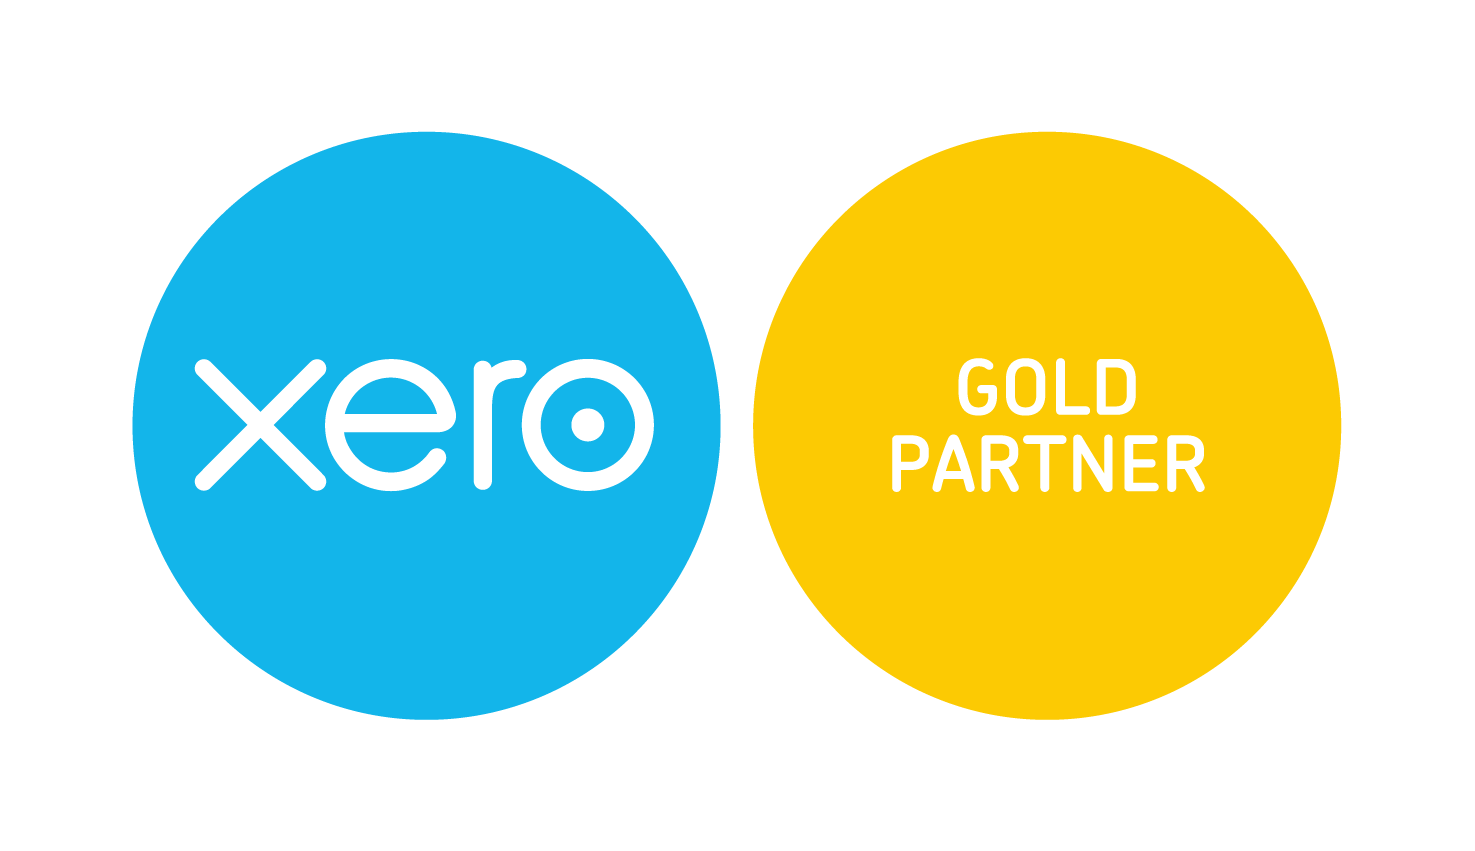 xero Gold Partner